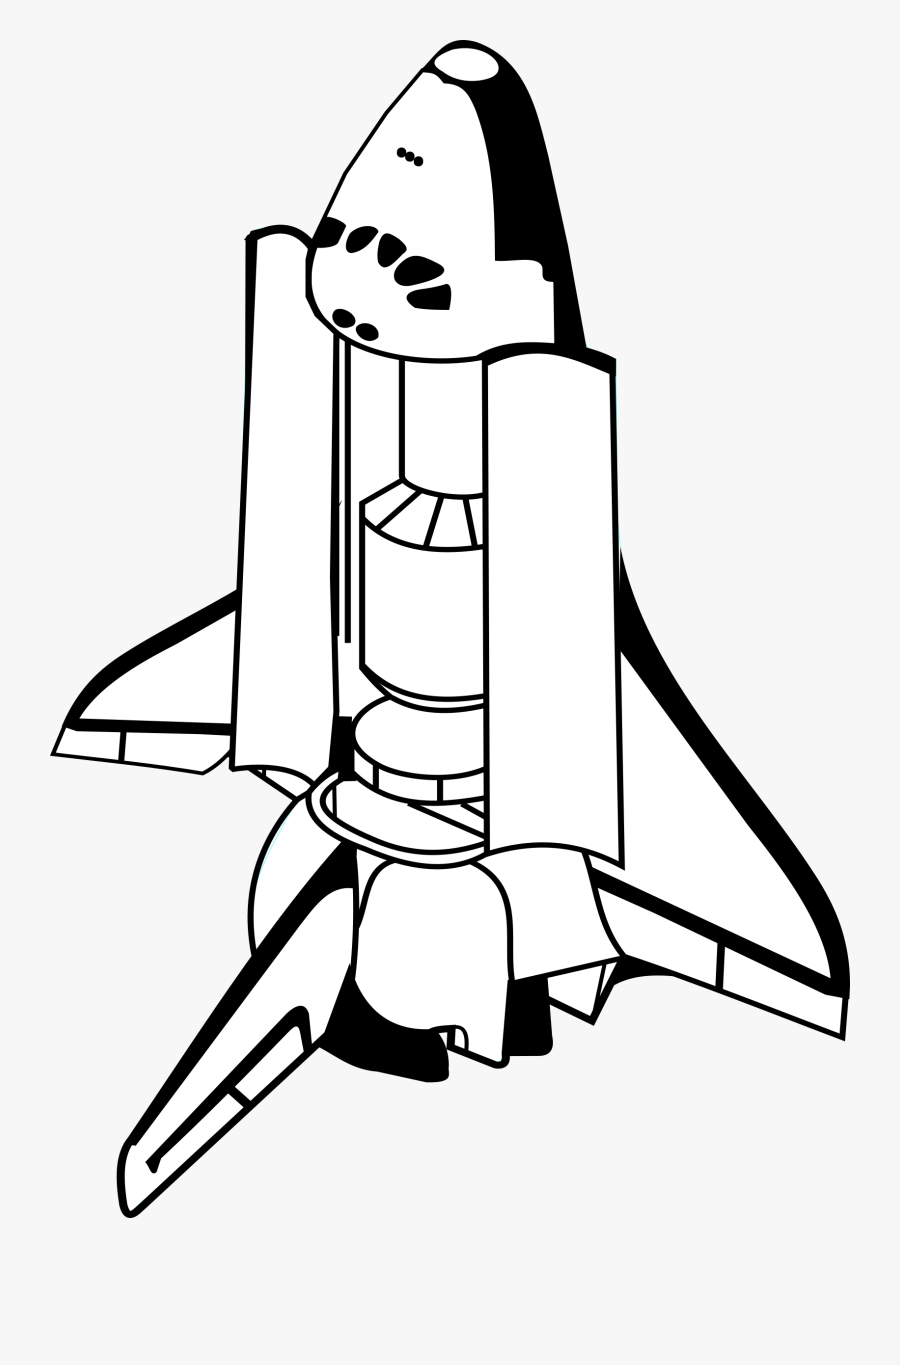 Drawing Doors Cartoon - Space Shuttle Cartoon Drawing, Transparent Clipart